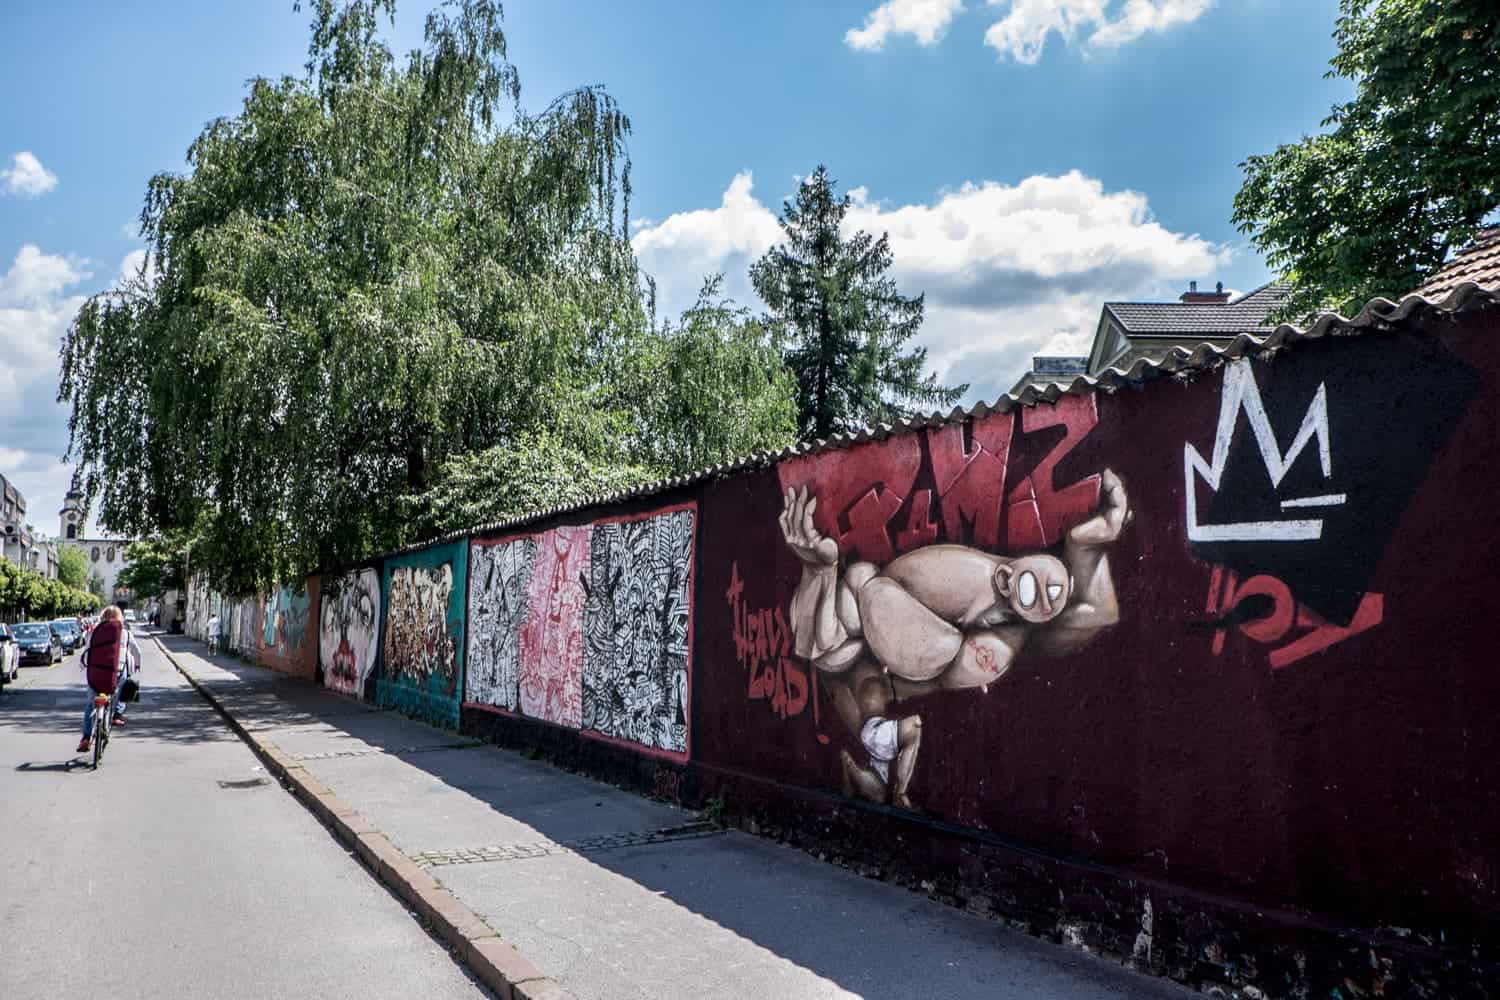 Street art outside Rog Factory in Ljubljana, Slovenia